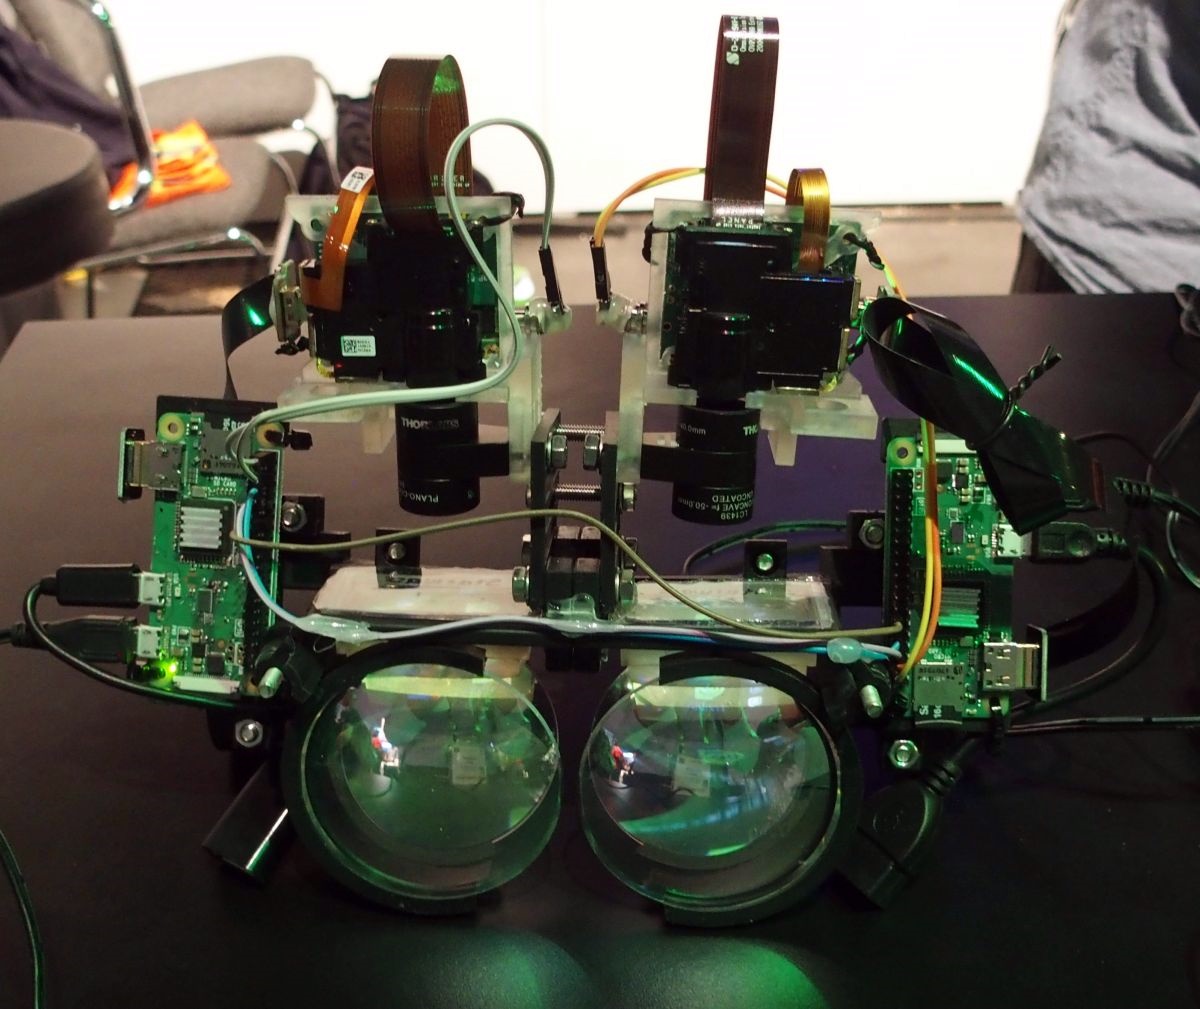 NVIDIAが激安ARグラス、3Dプリンター製光学素子とラズパイで | 日経